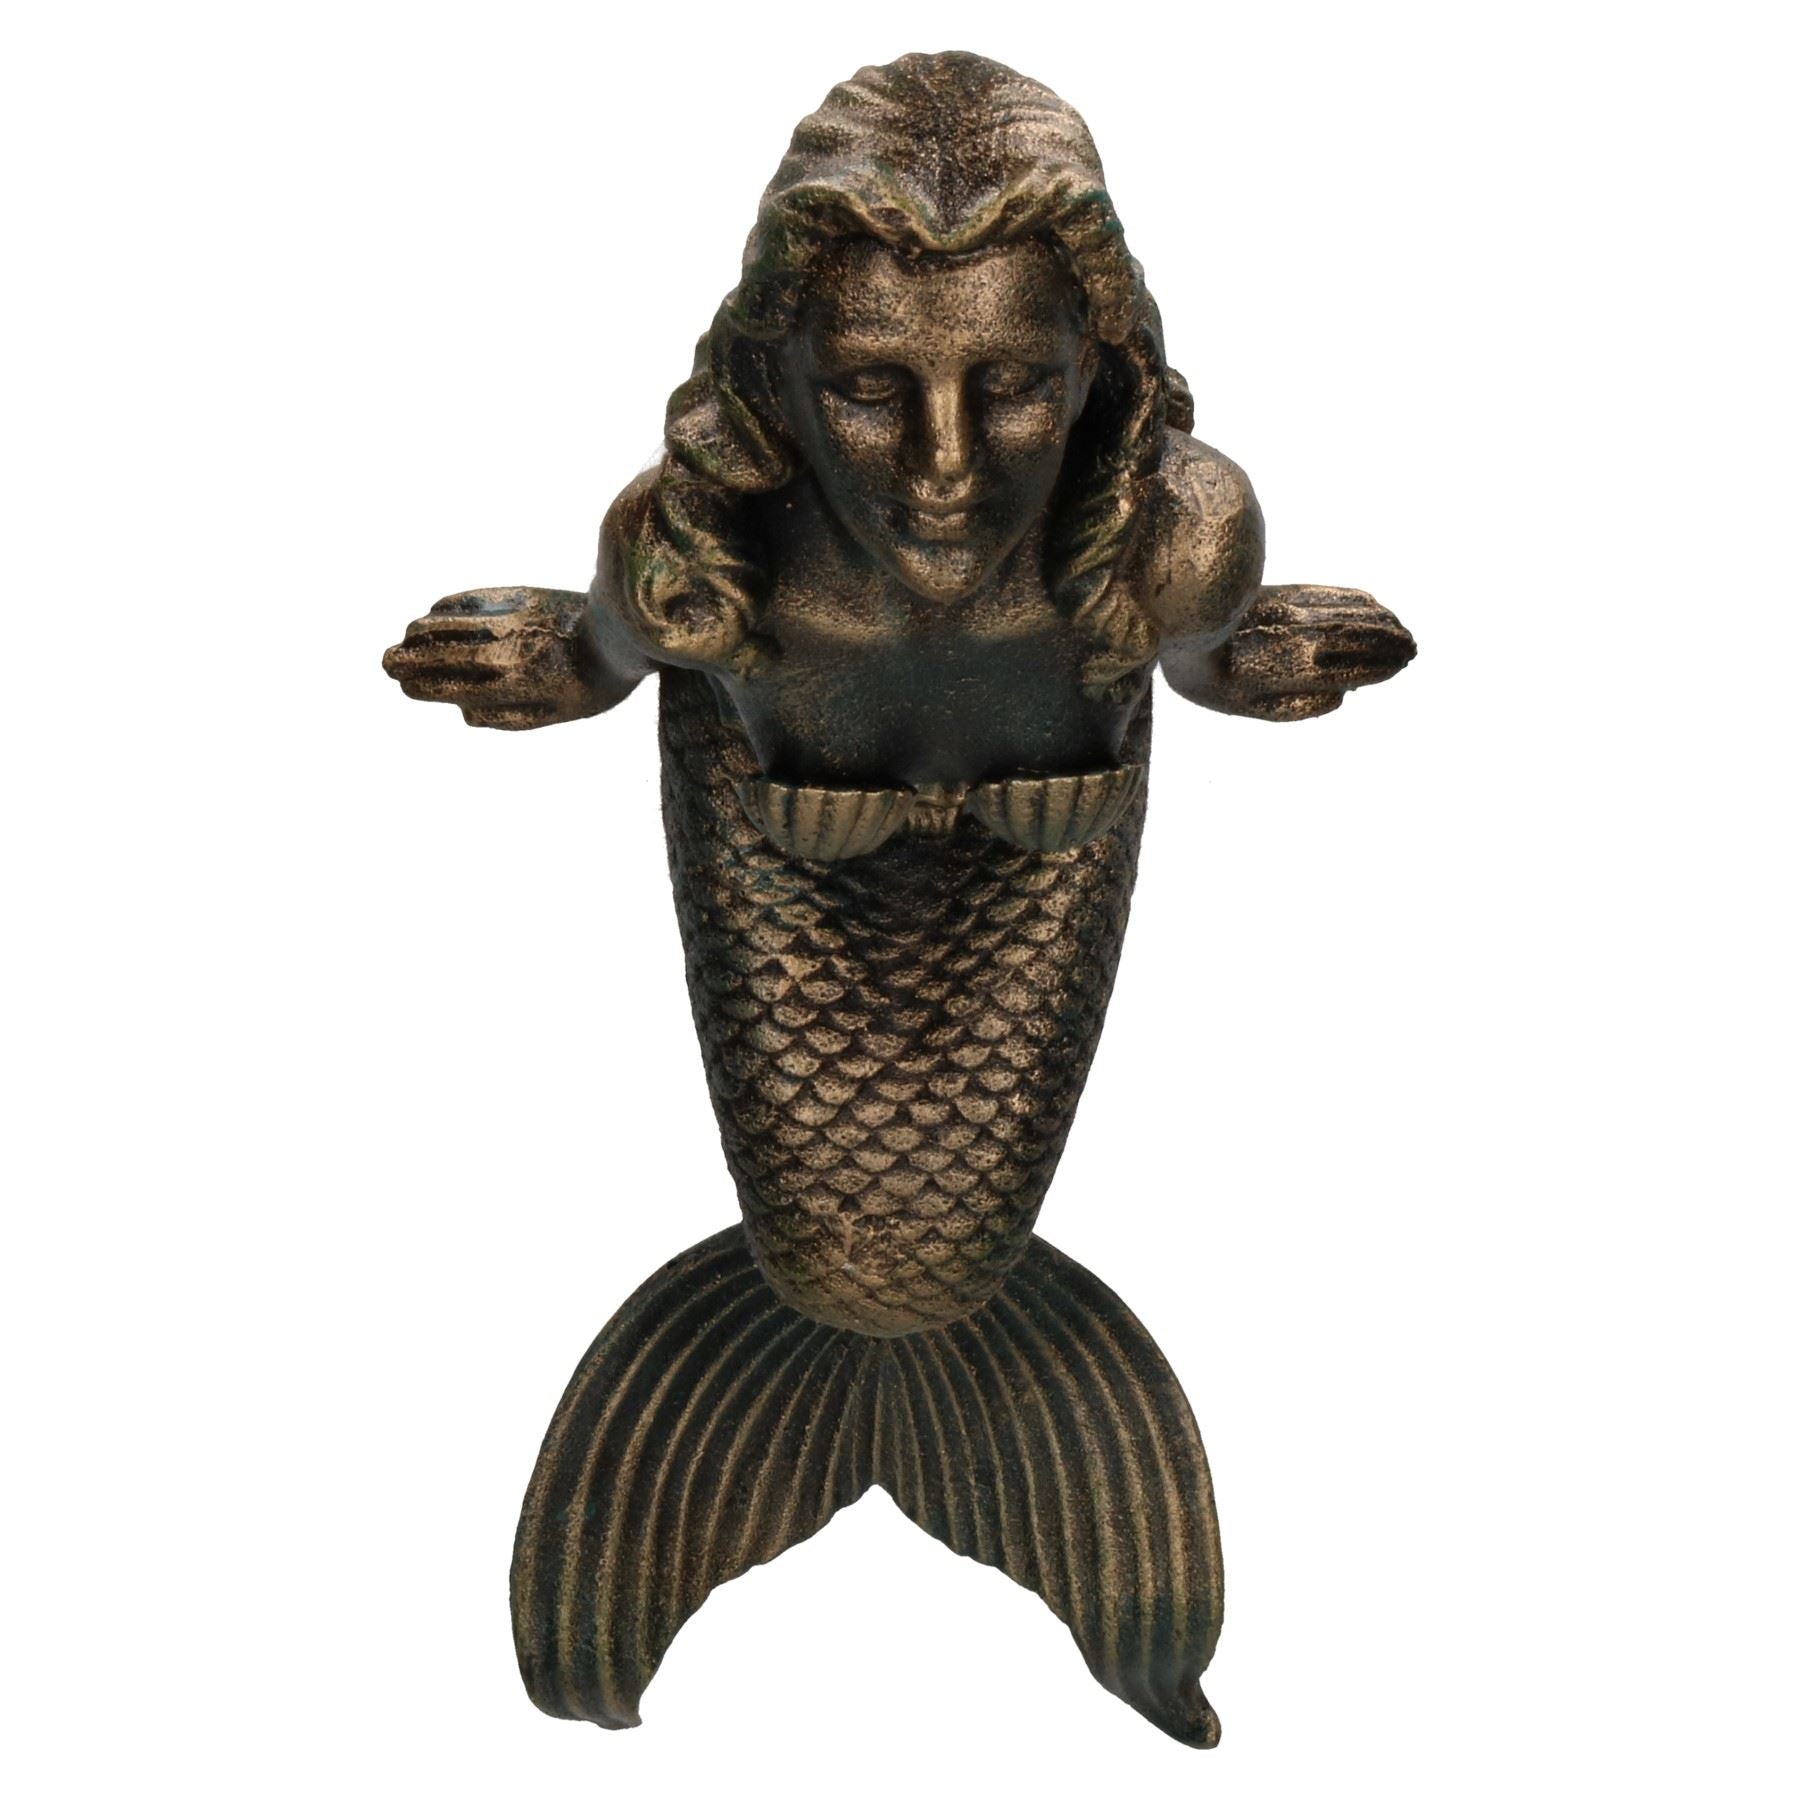 16" Mermaid Cast Iron Statue Figure Ornament Garden Water Pond Shelf Sitting